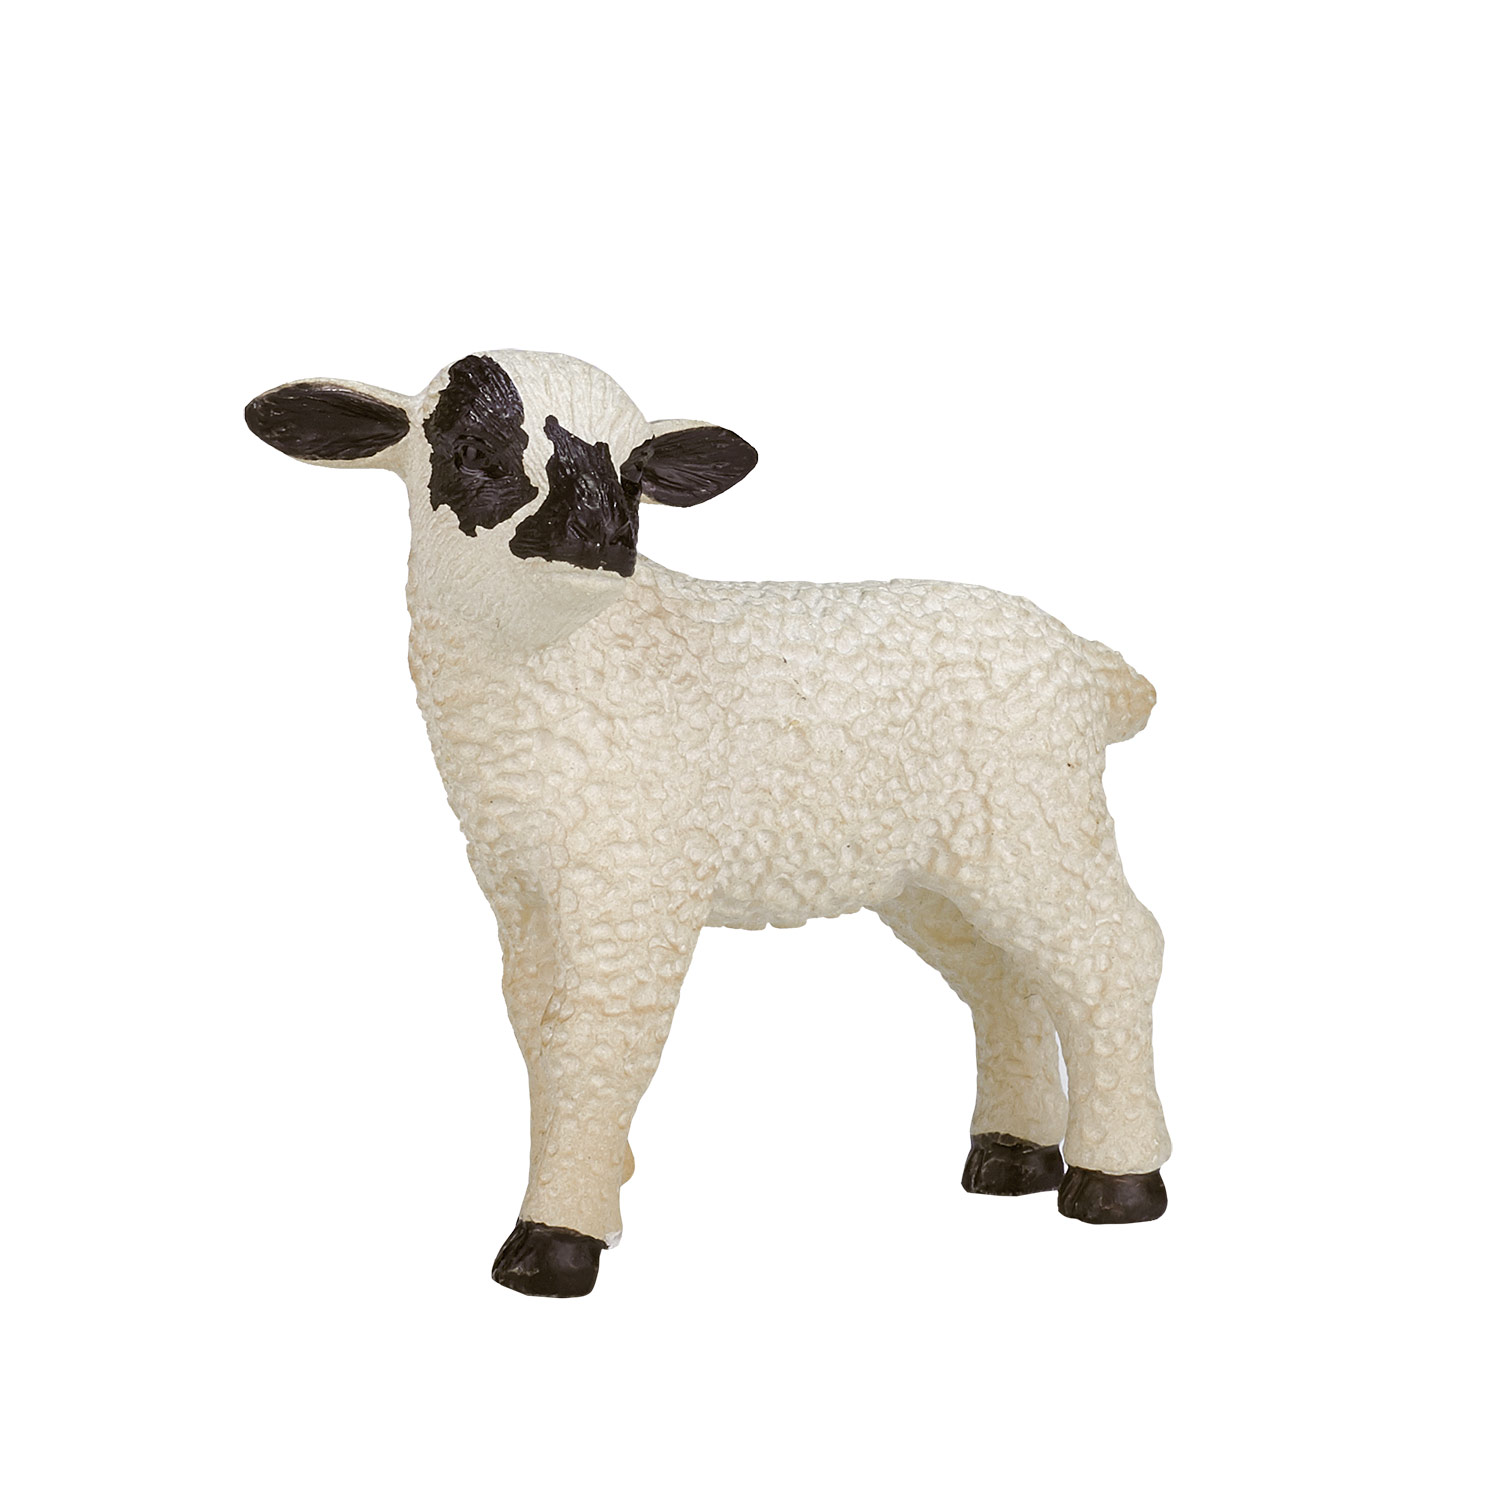 Mojo Farmland Mouton Tête Noire Agneau - 387059